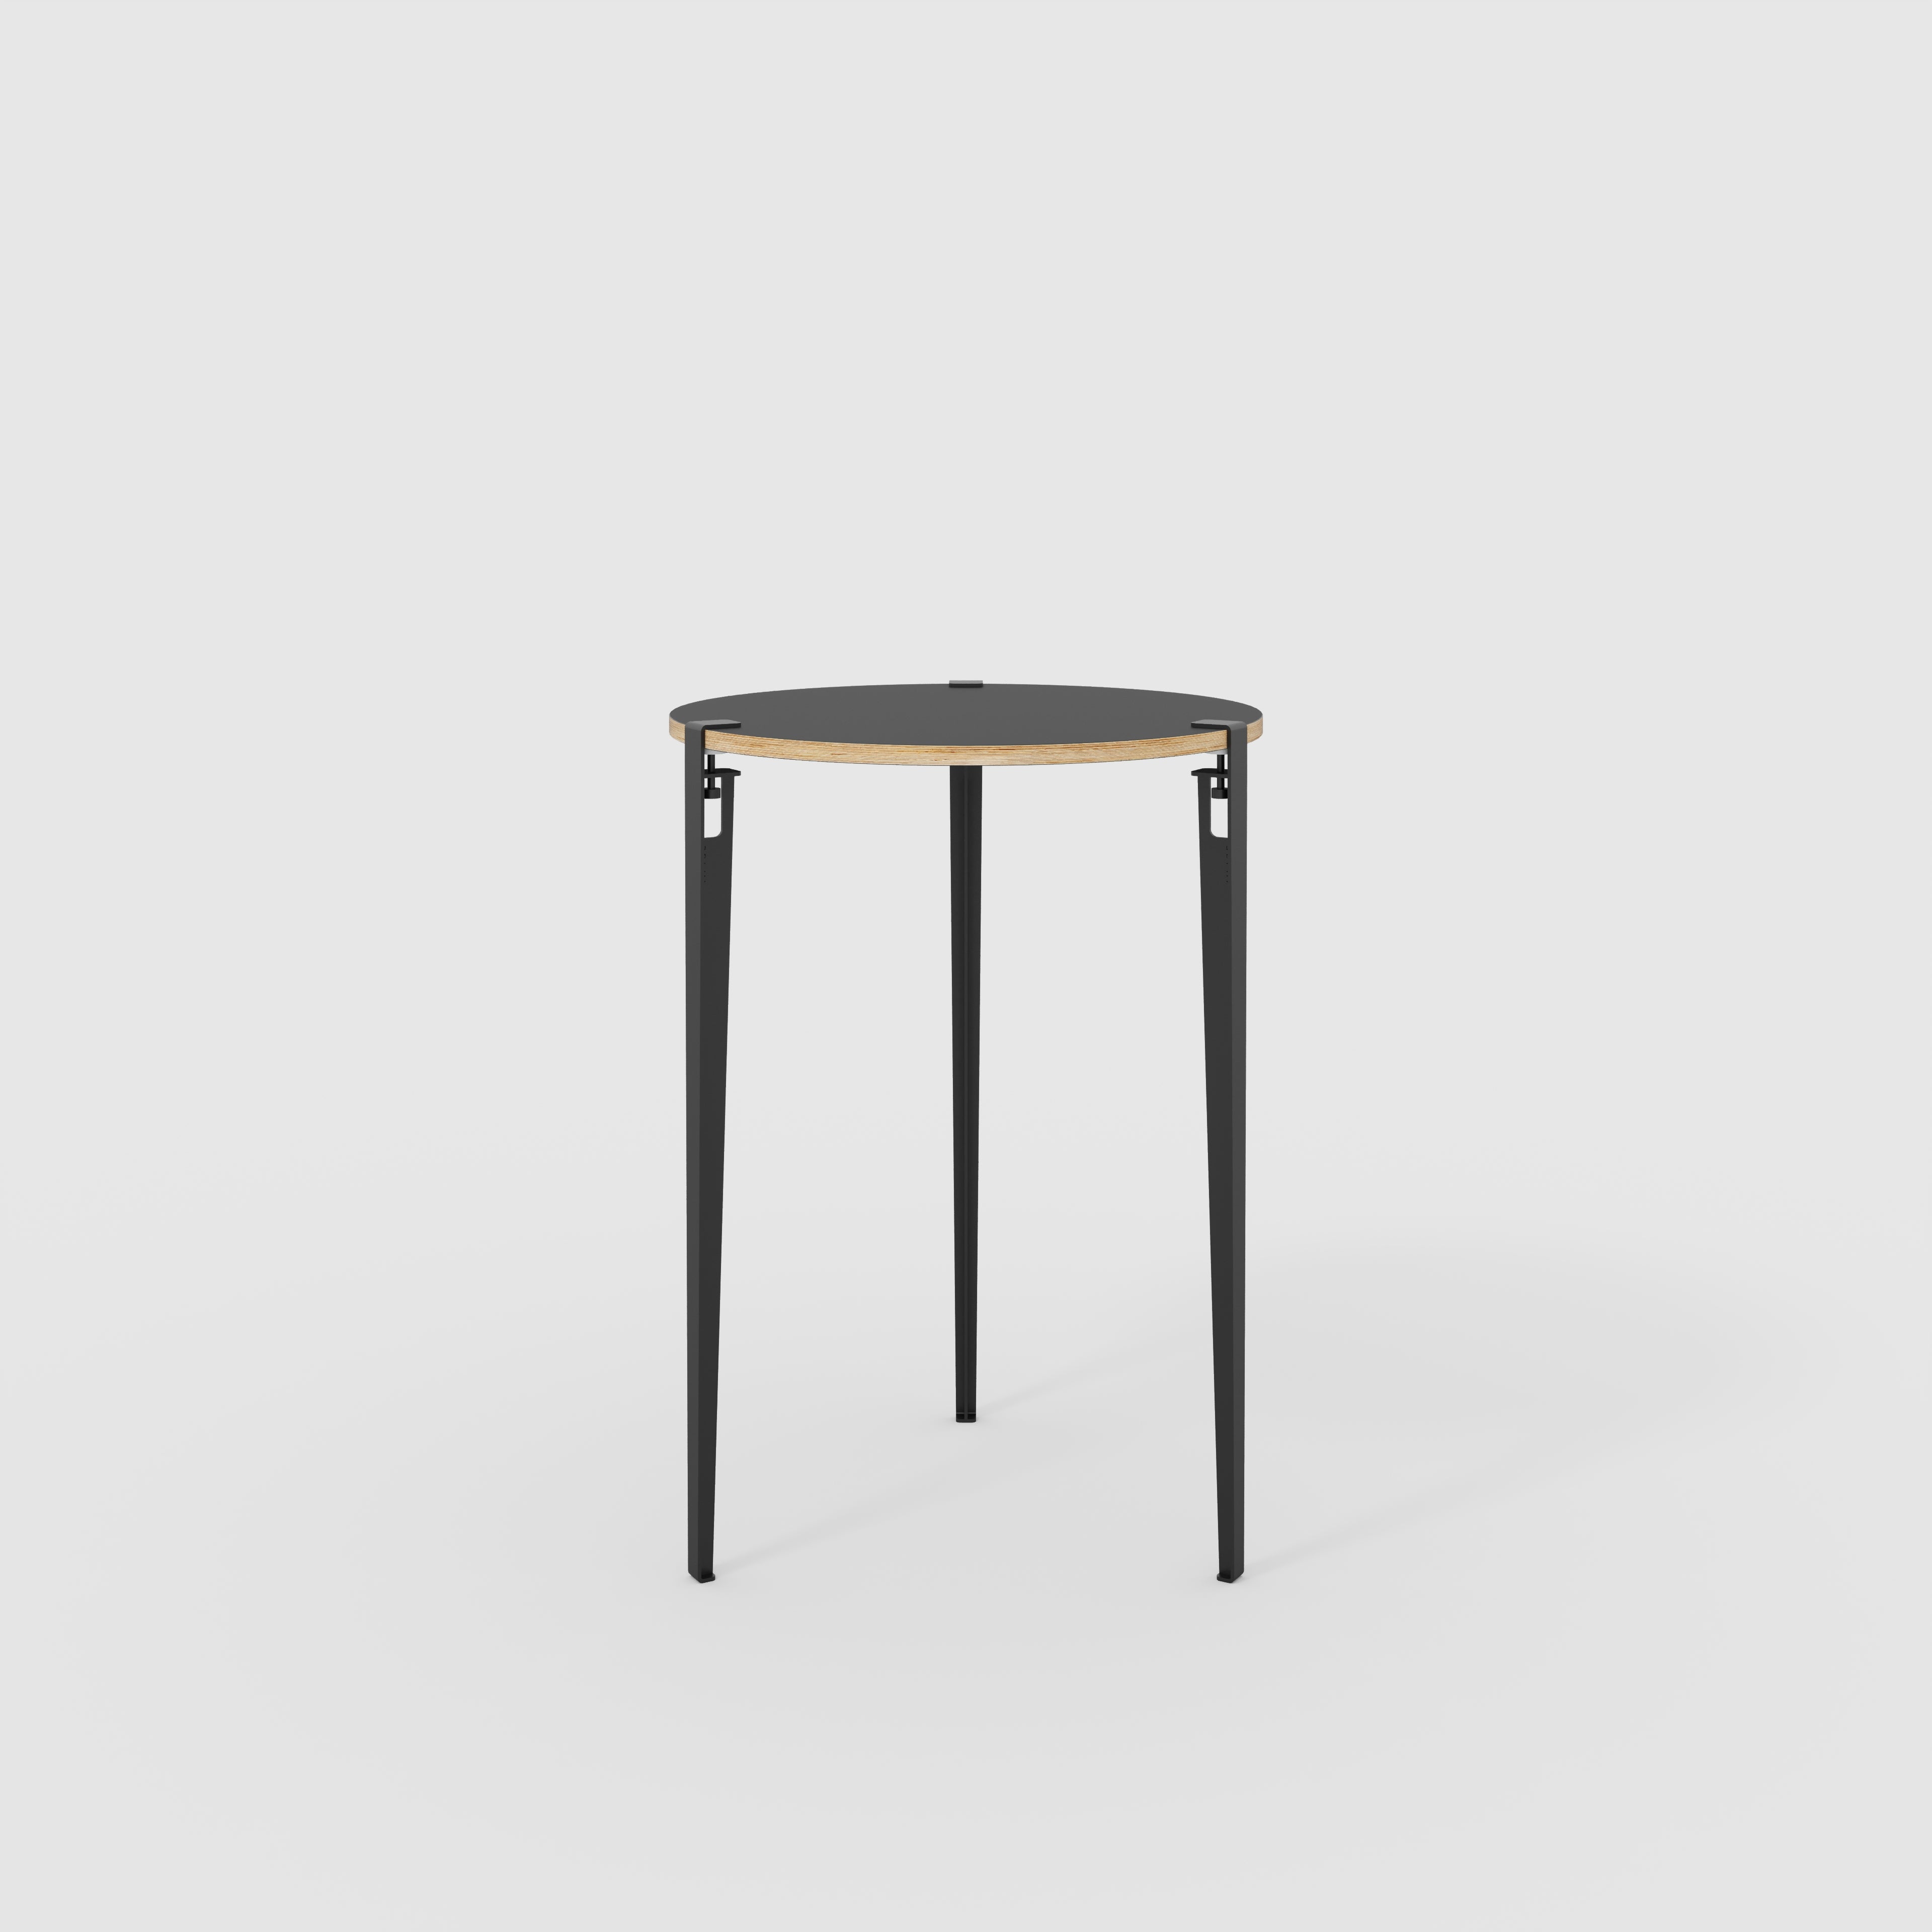 Round Table with Black Tiptoe Legs - Formica Diamond Black - 800(dia) x 1100(h)